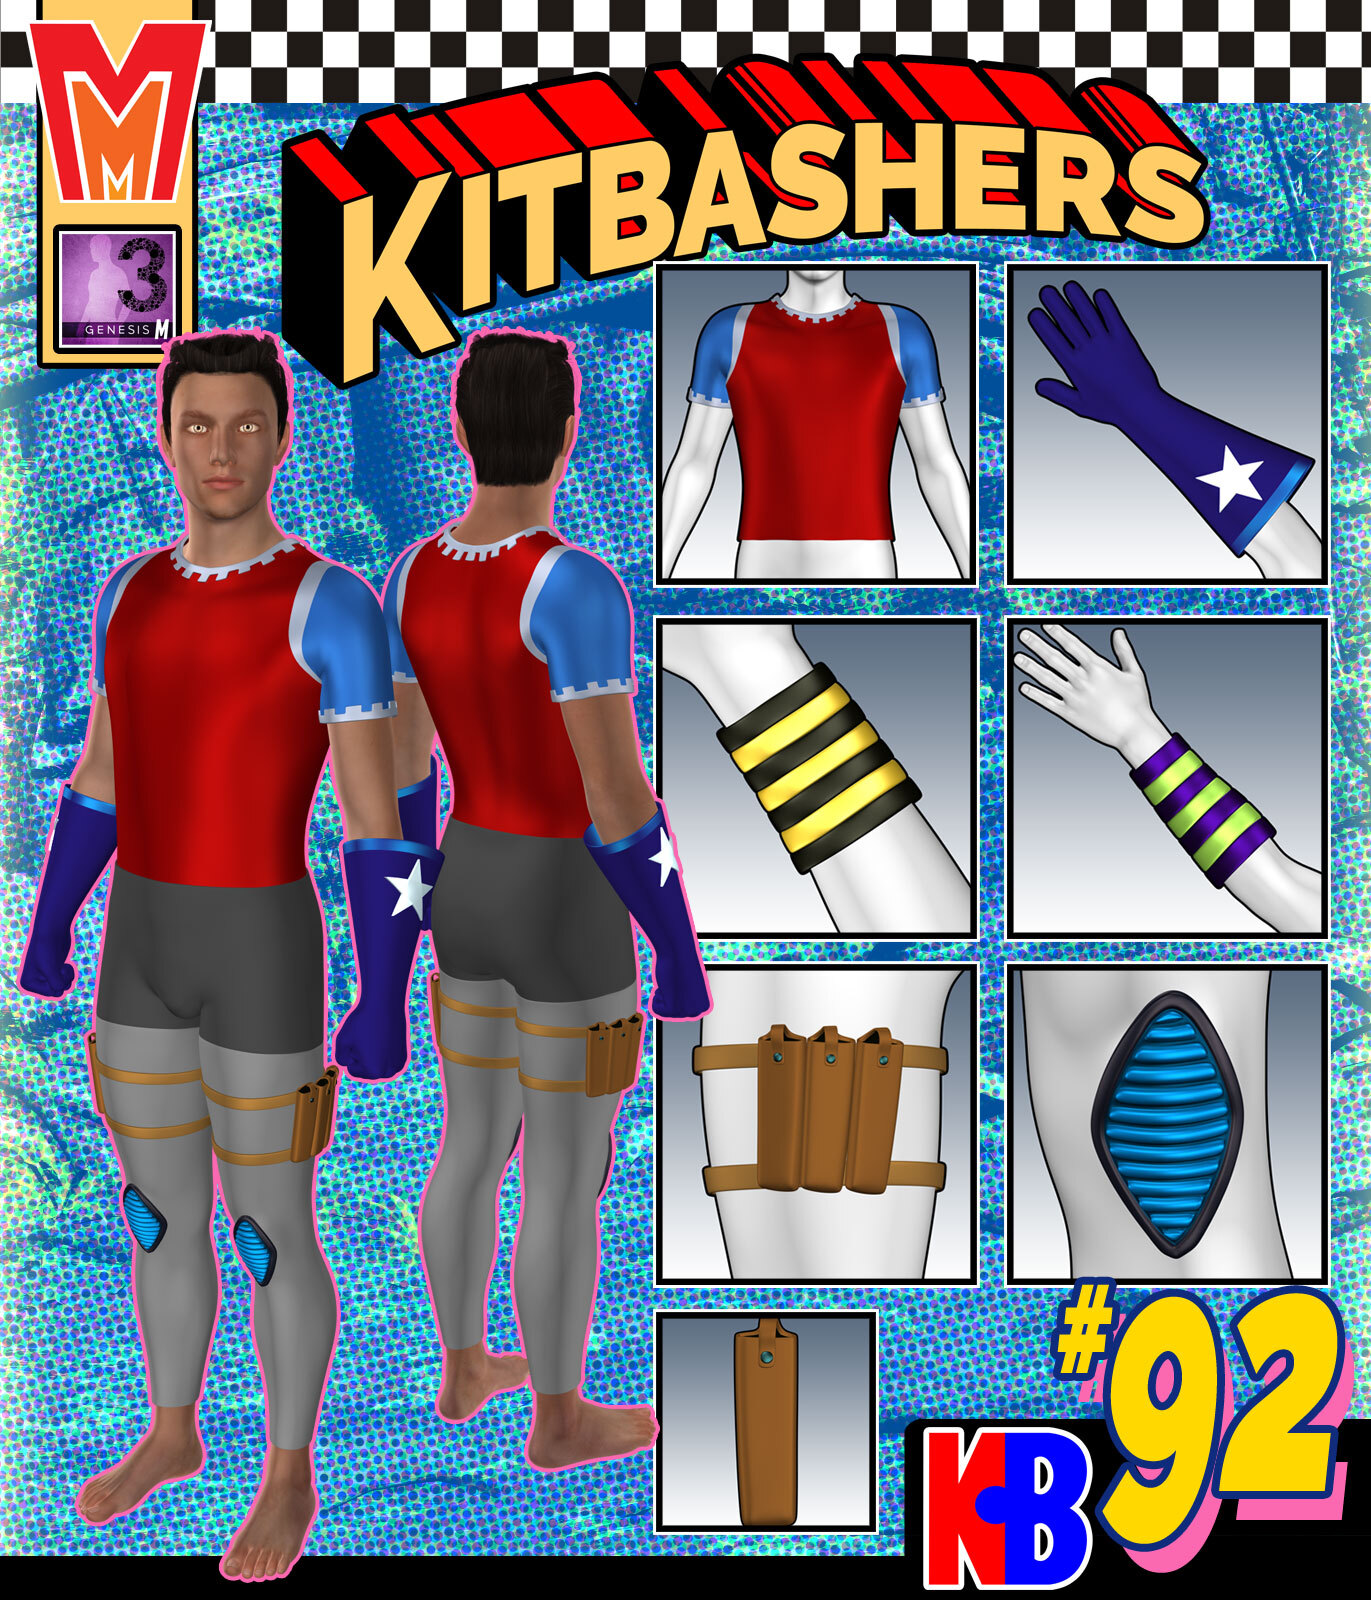 Kitbashers 092 MMG3M by: MightyMite, 3D Models by Daz 3D